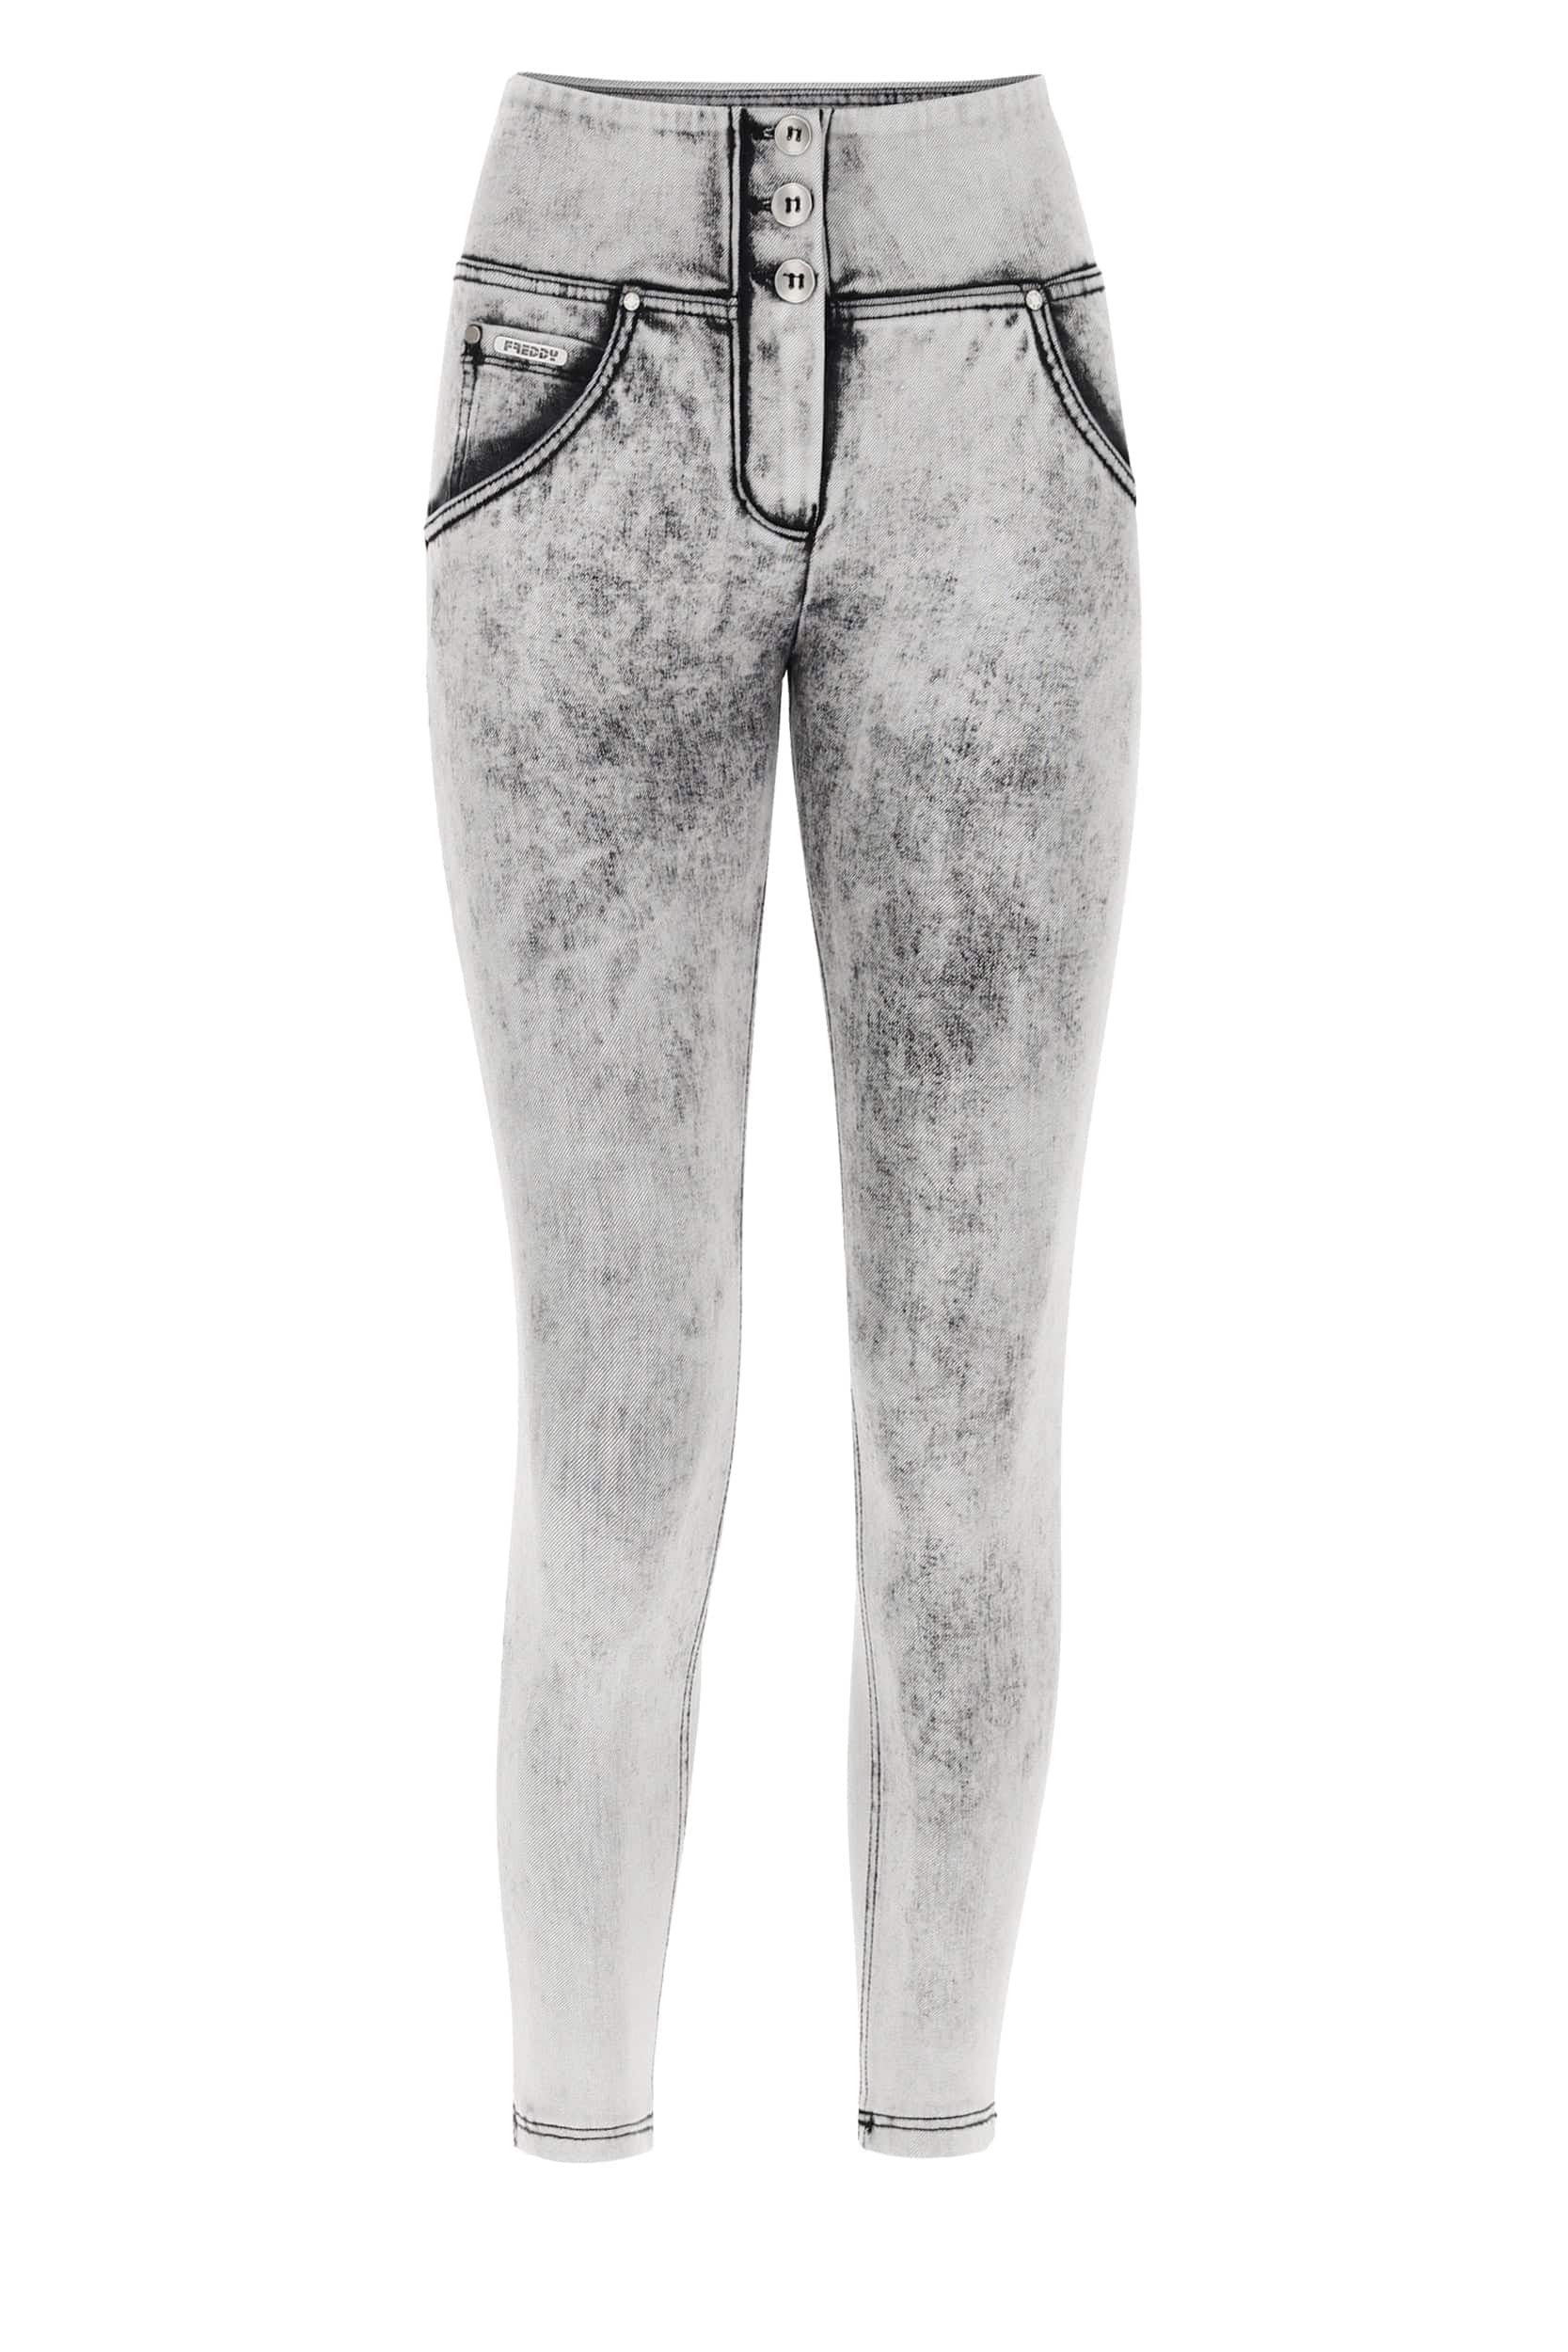 WR.UP® Snug Jeans - High Waisted - 7/8 Length - Acid Wash Grey + Black Stitching 2